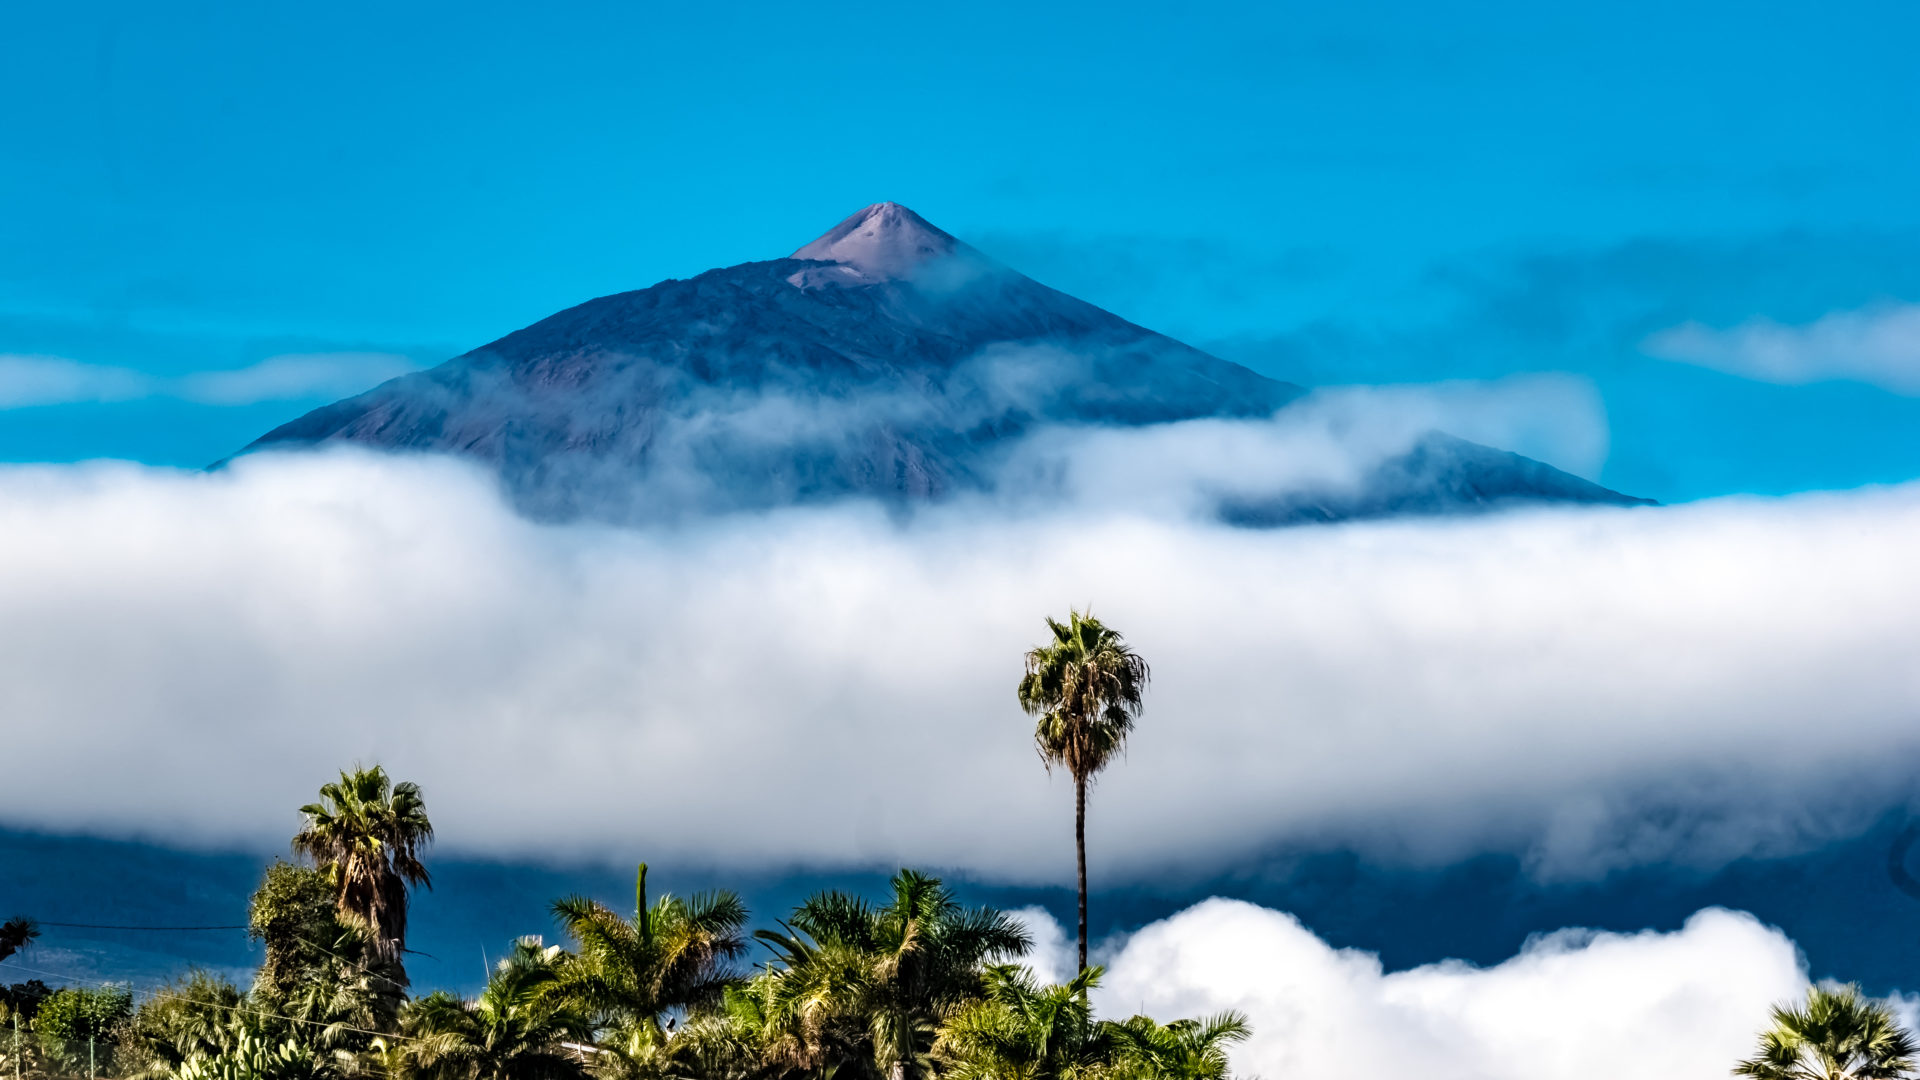 Der Pico del Teide - Größter Berg Spaniens